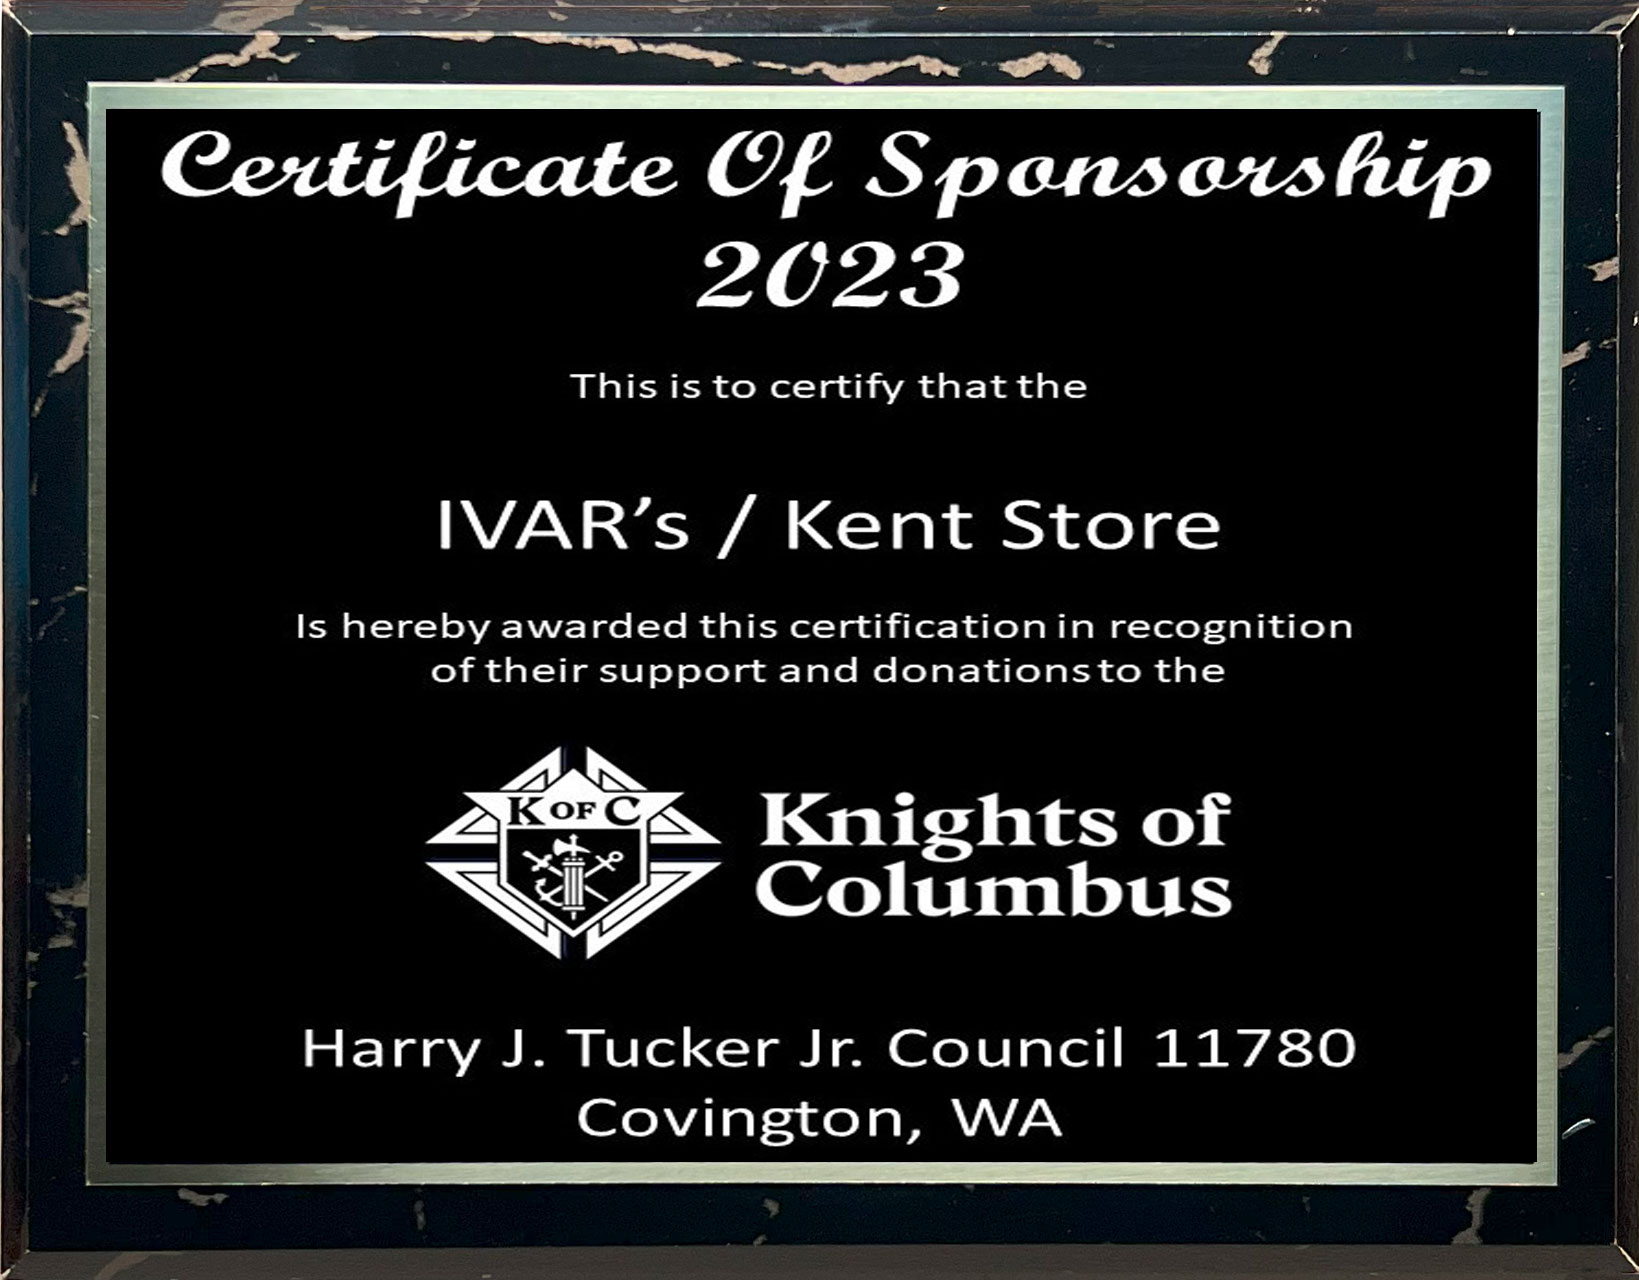 KOFC Harry tucker Council 11780 certificate of appreciation presentation to Ivar's Restaurants - Kent